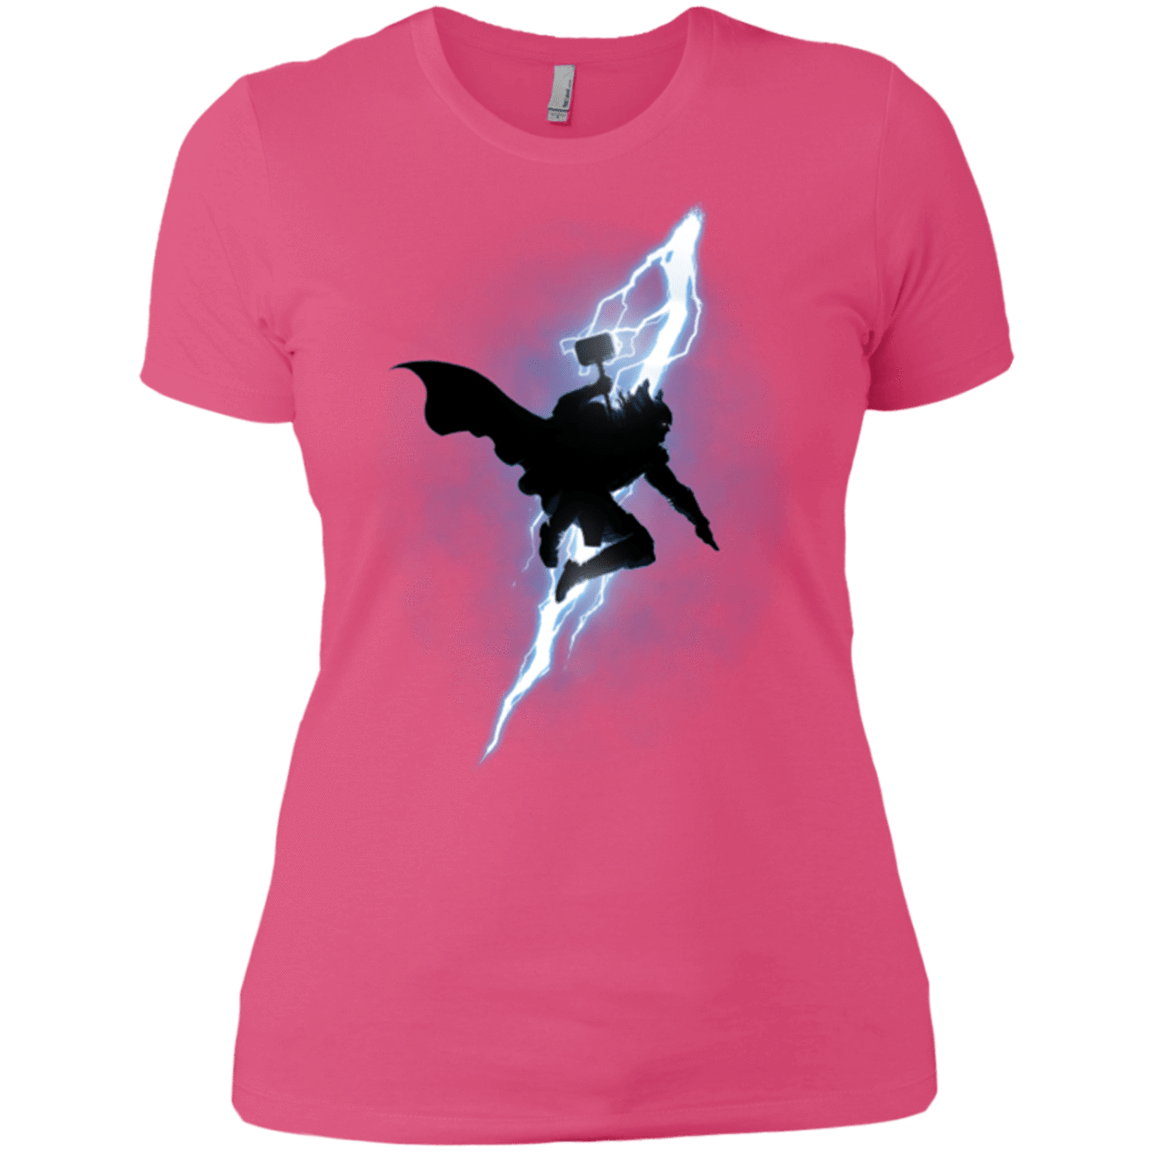 T-Shirts Hot Pink / X-Small The Thunder God Returns Women's Premium T-Shirt